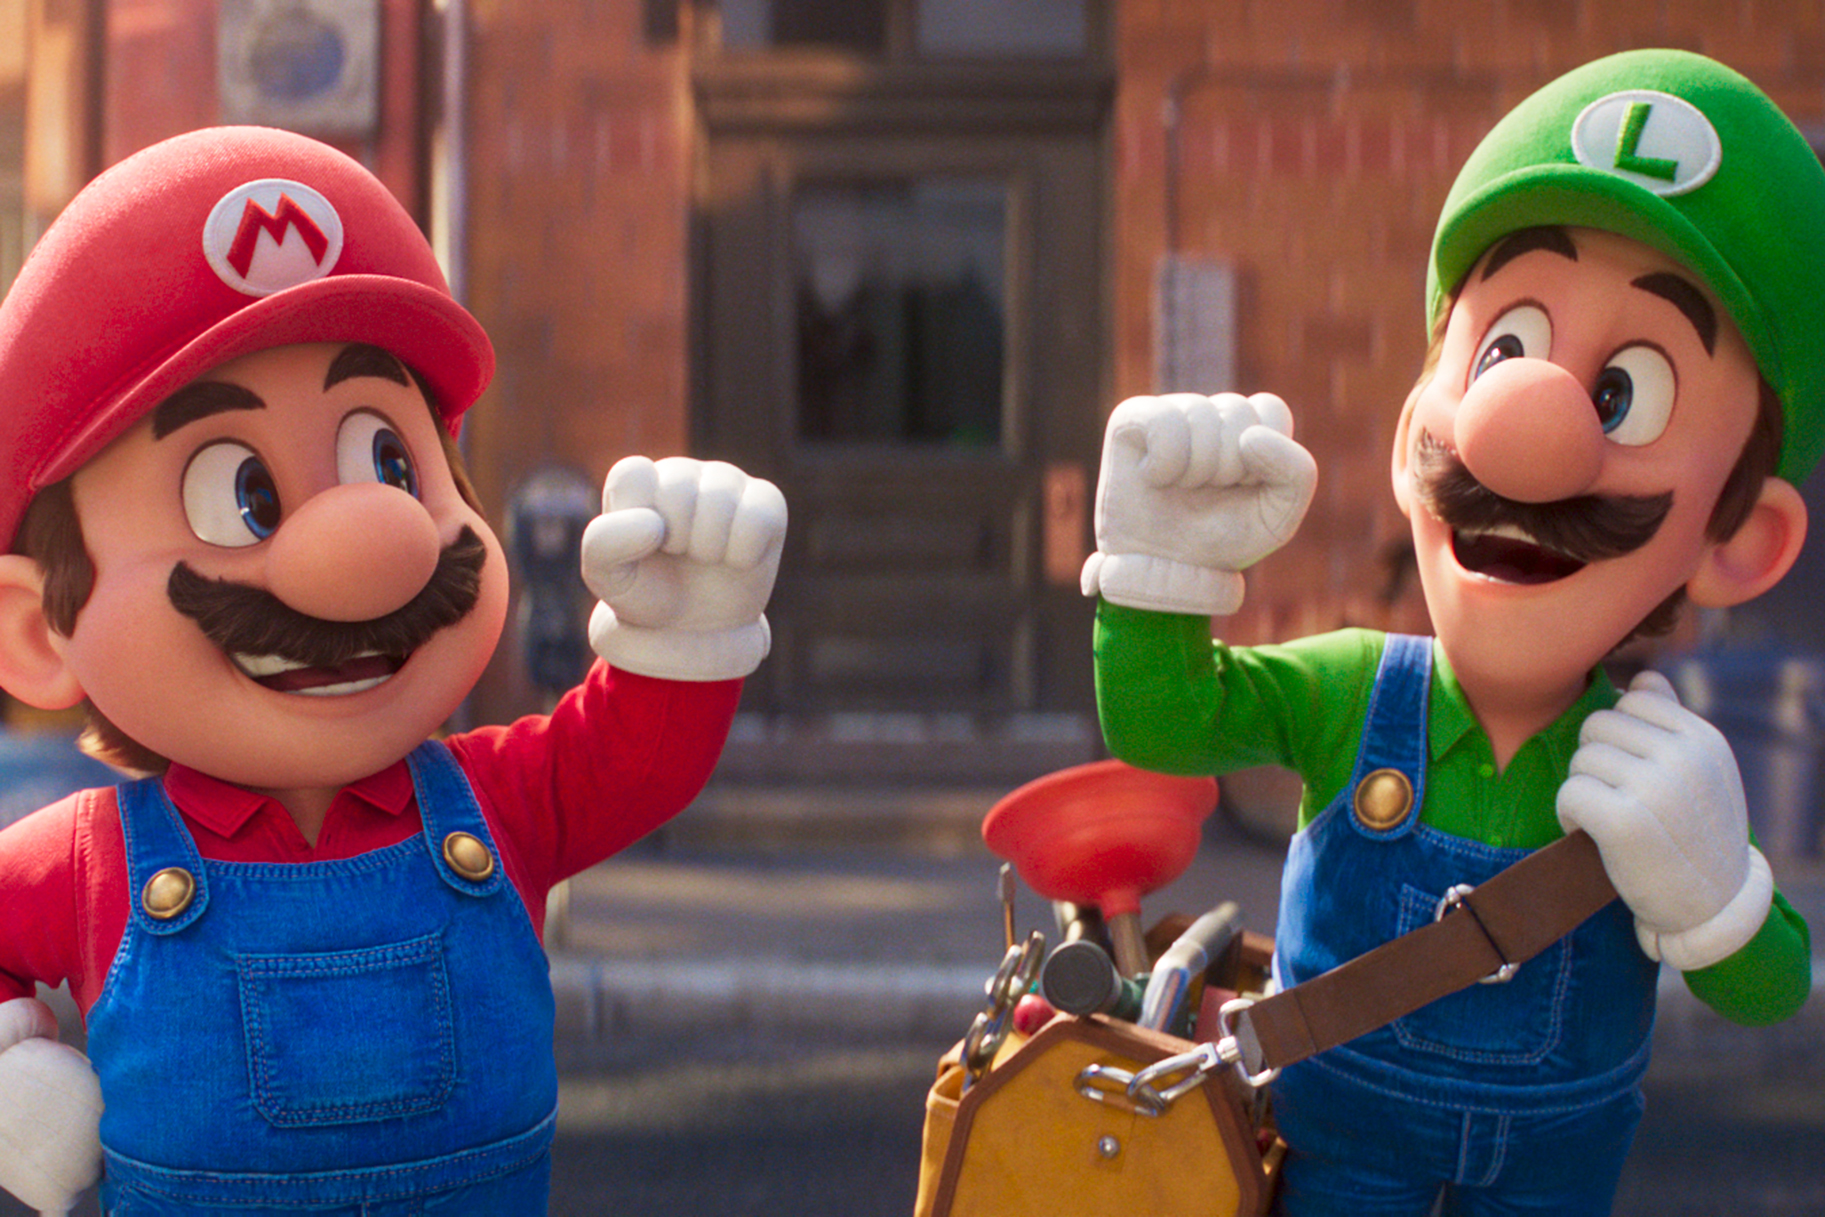 Mario and Luigi in the Mario Bros Movie